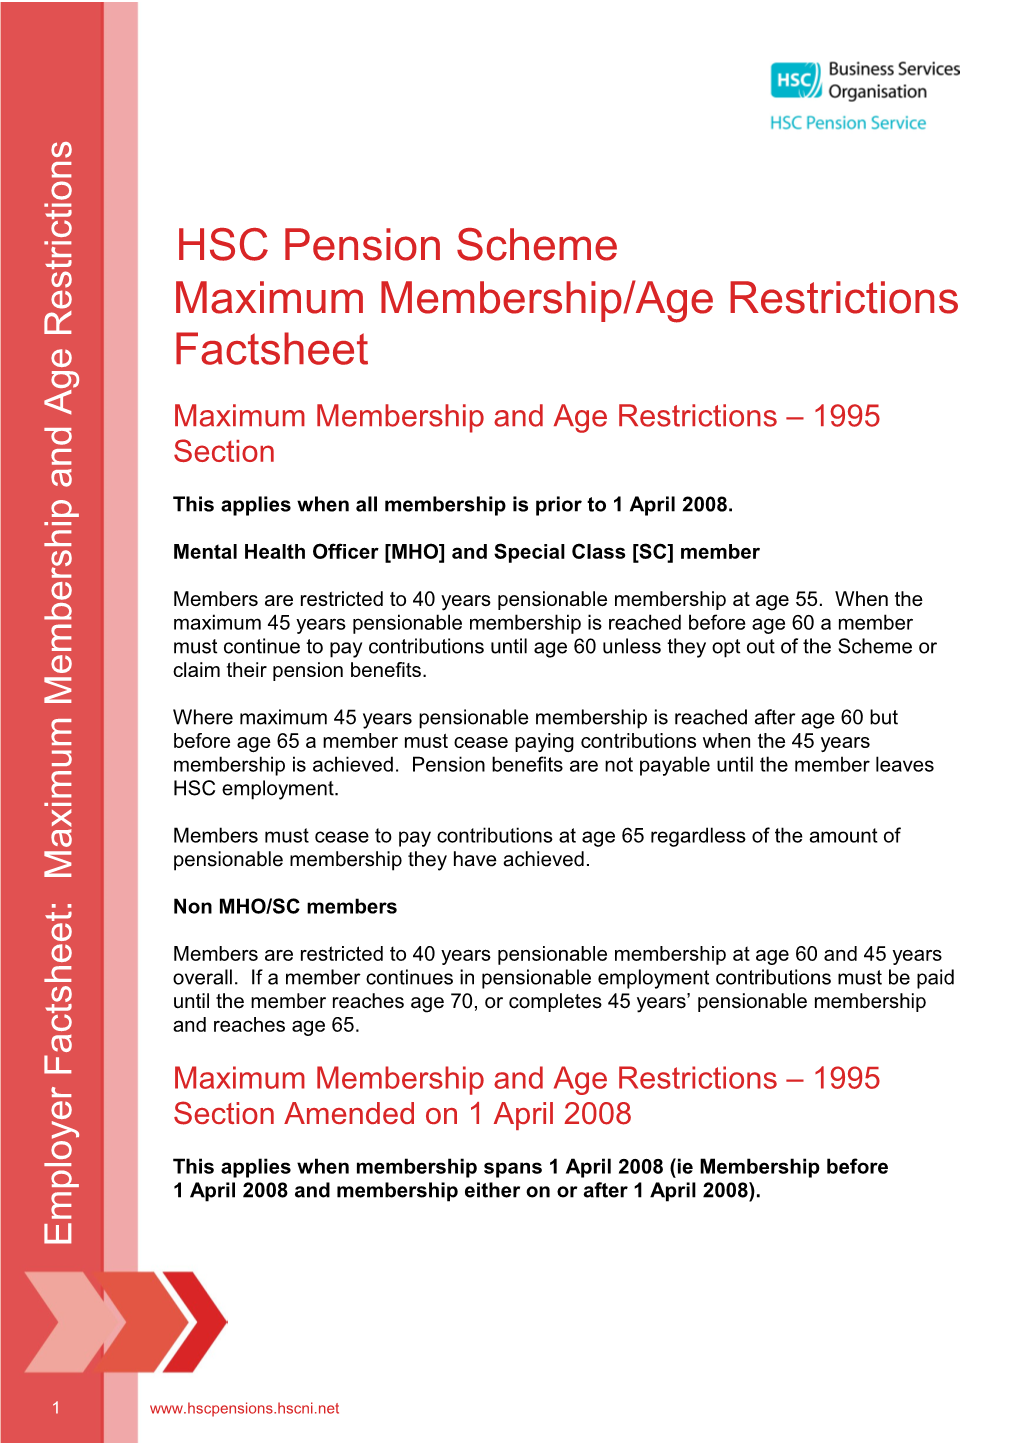 Maximum Membership/Age Restrictions Factsheet